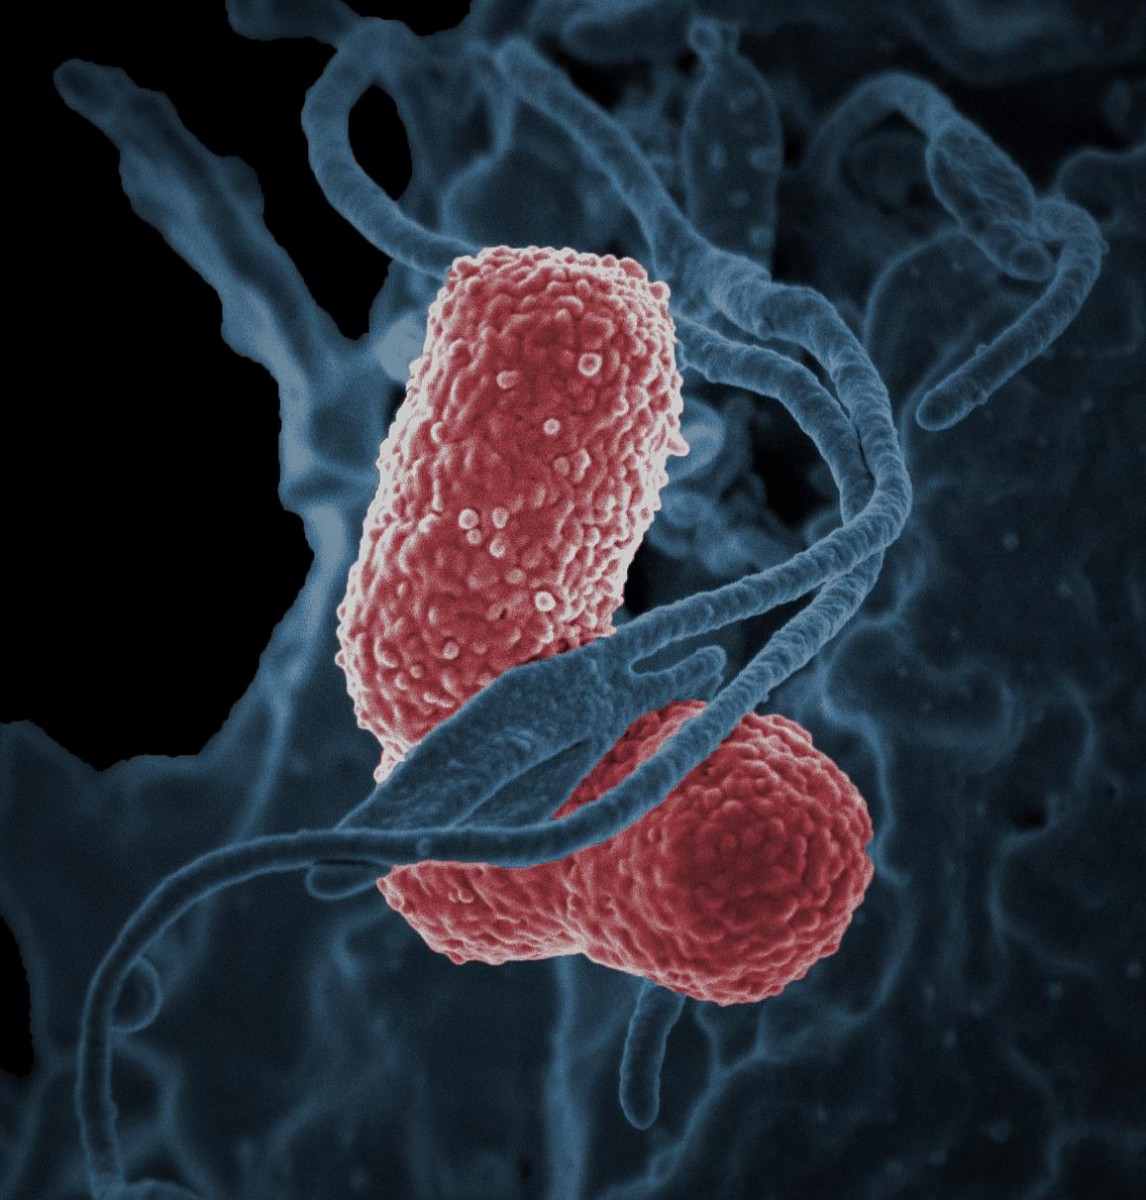 Klebsiella bacteria